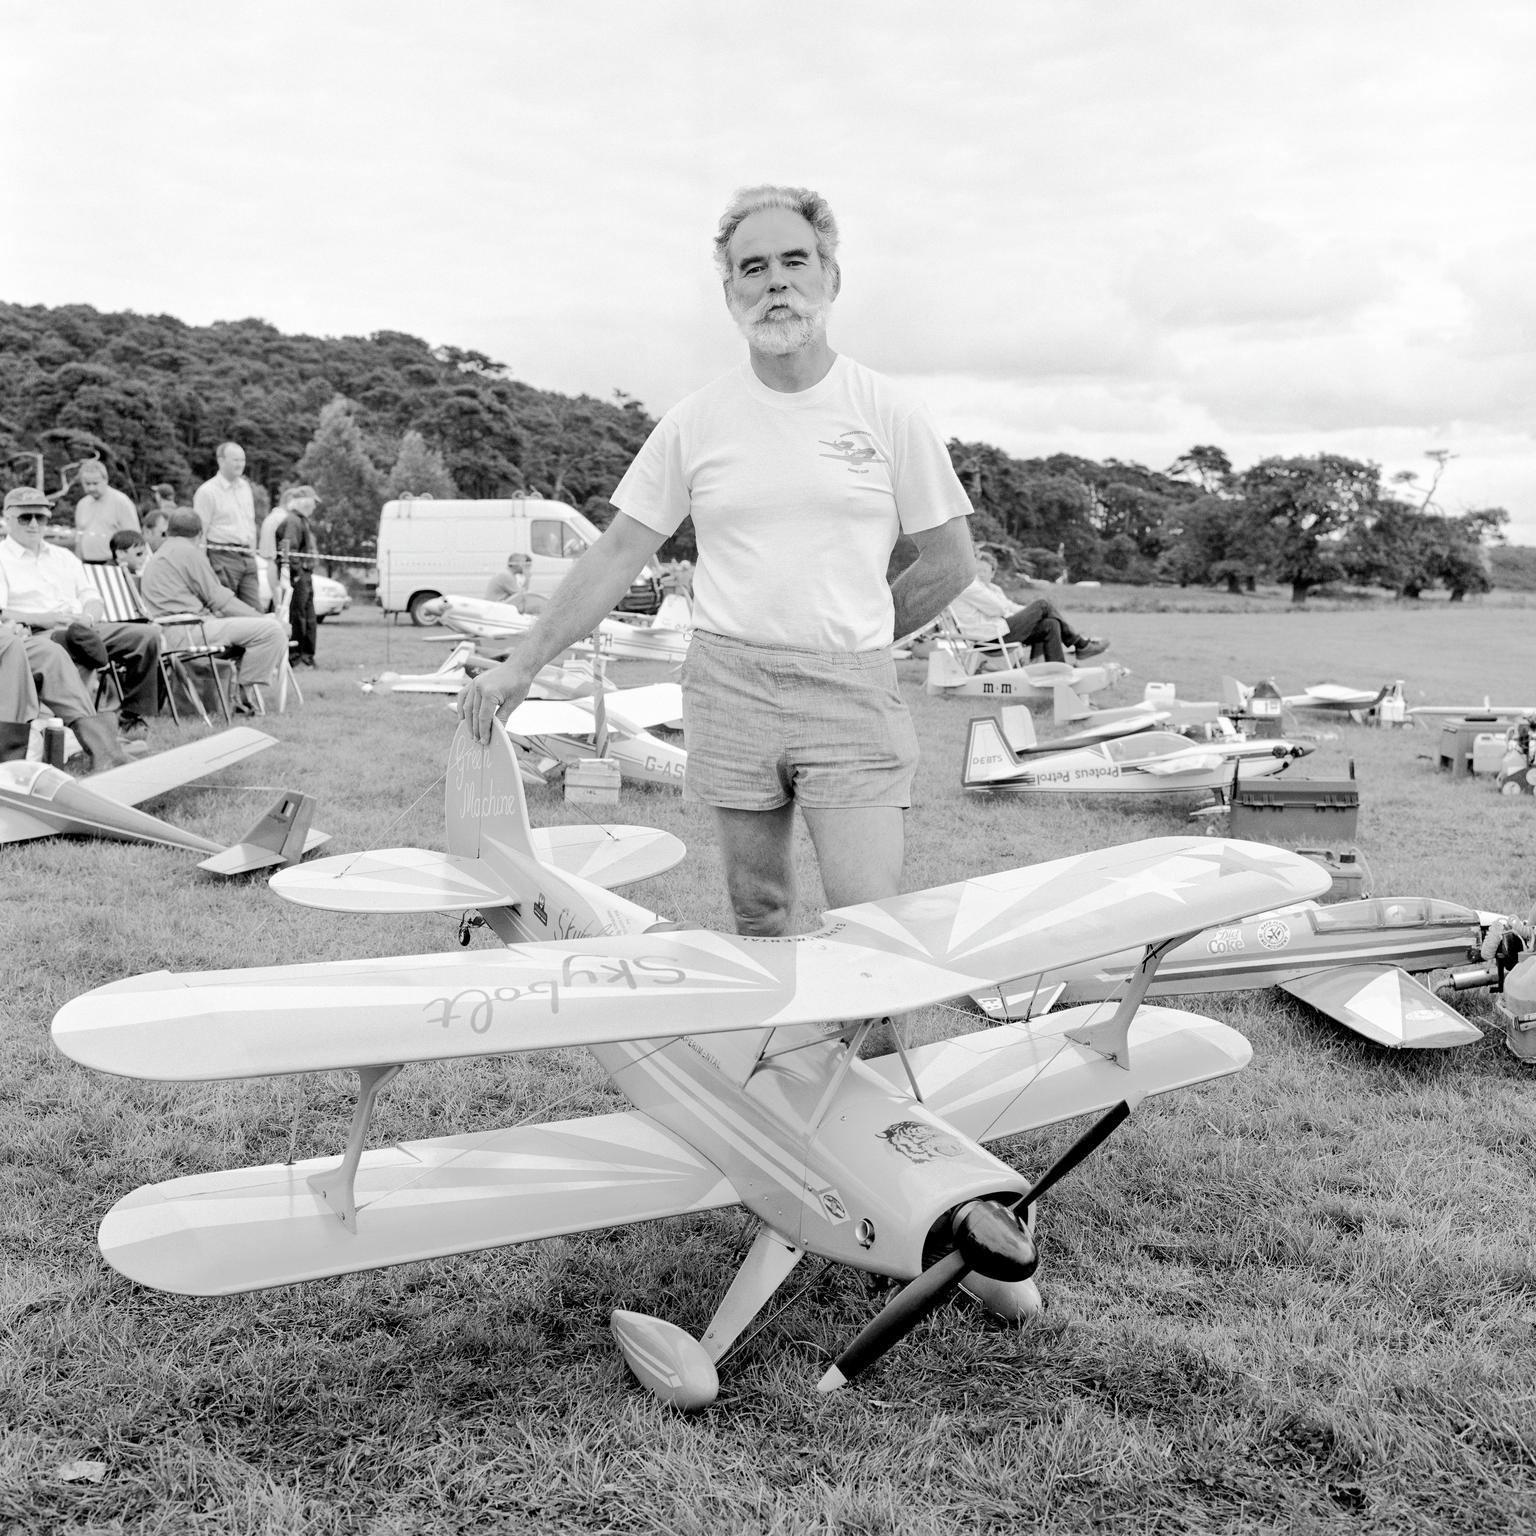 Tim Edwards member of Cardiff Model Aircraft Club. Margam Park, Wales